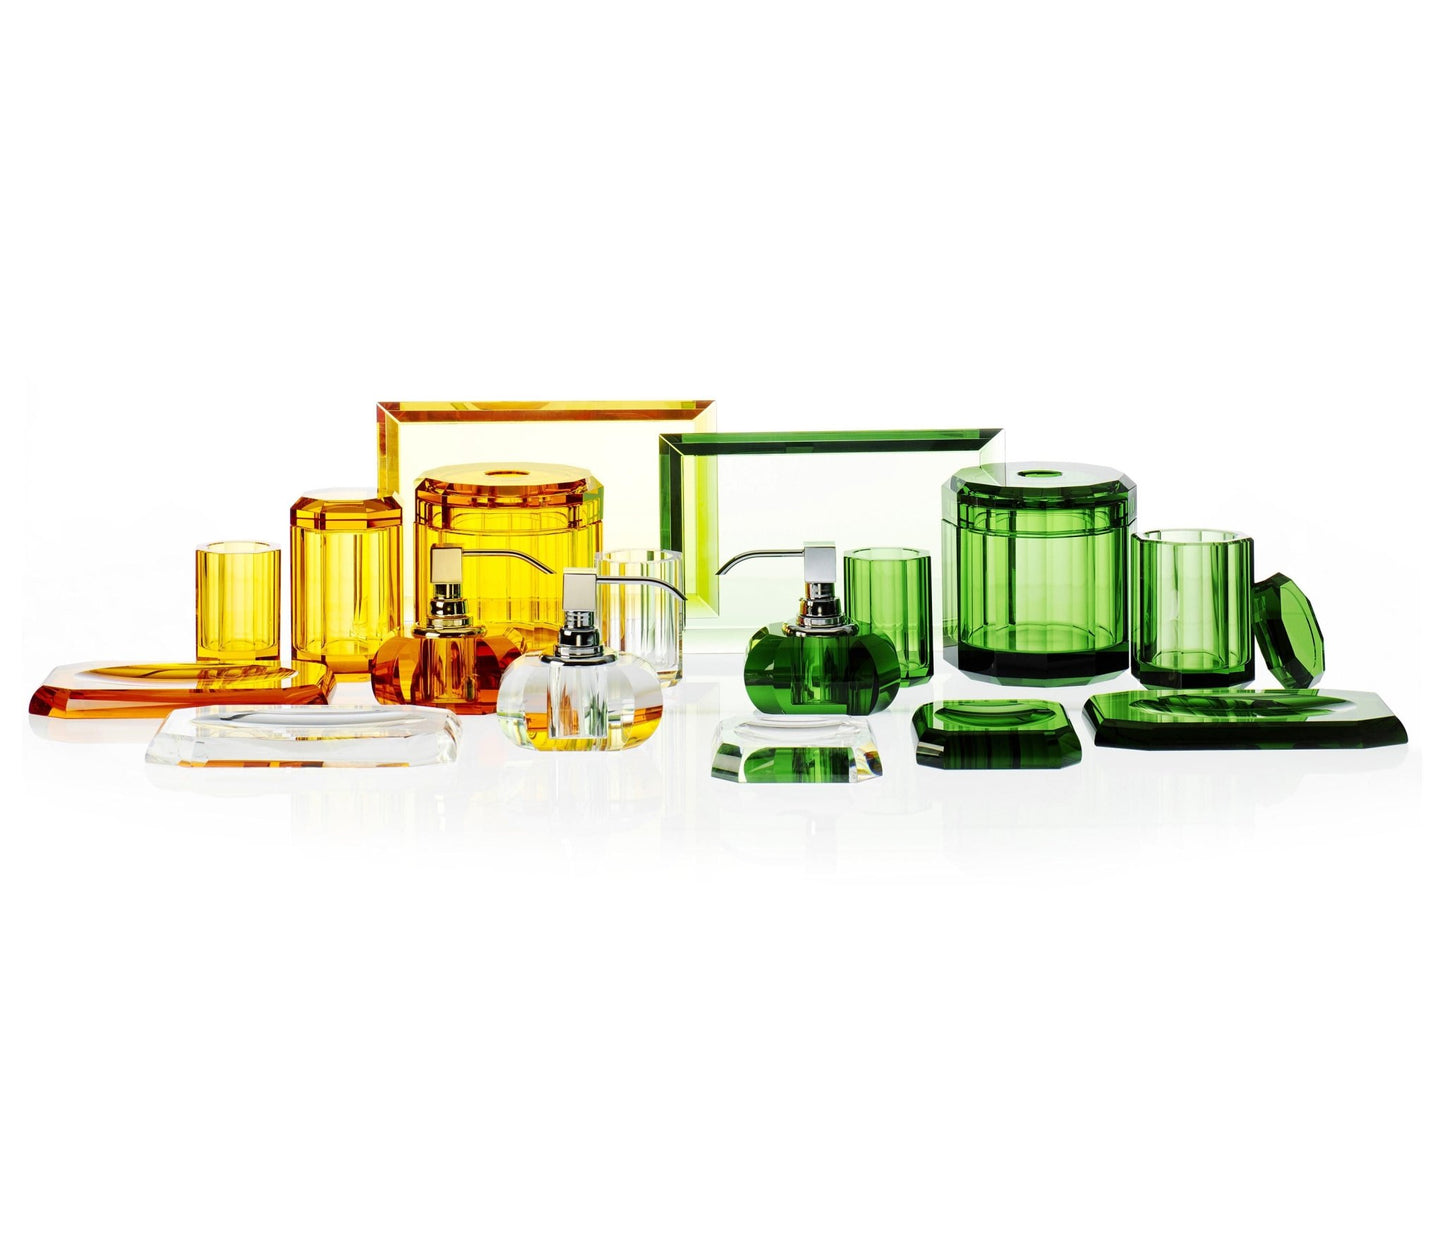 Luxury Shiny Gold Crystal Liquid Soap Glass Dispenser | Amber - |VESIMI Design| Luxury Bathrooms and Home Decor